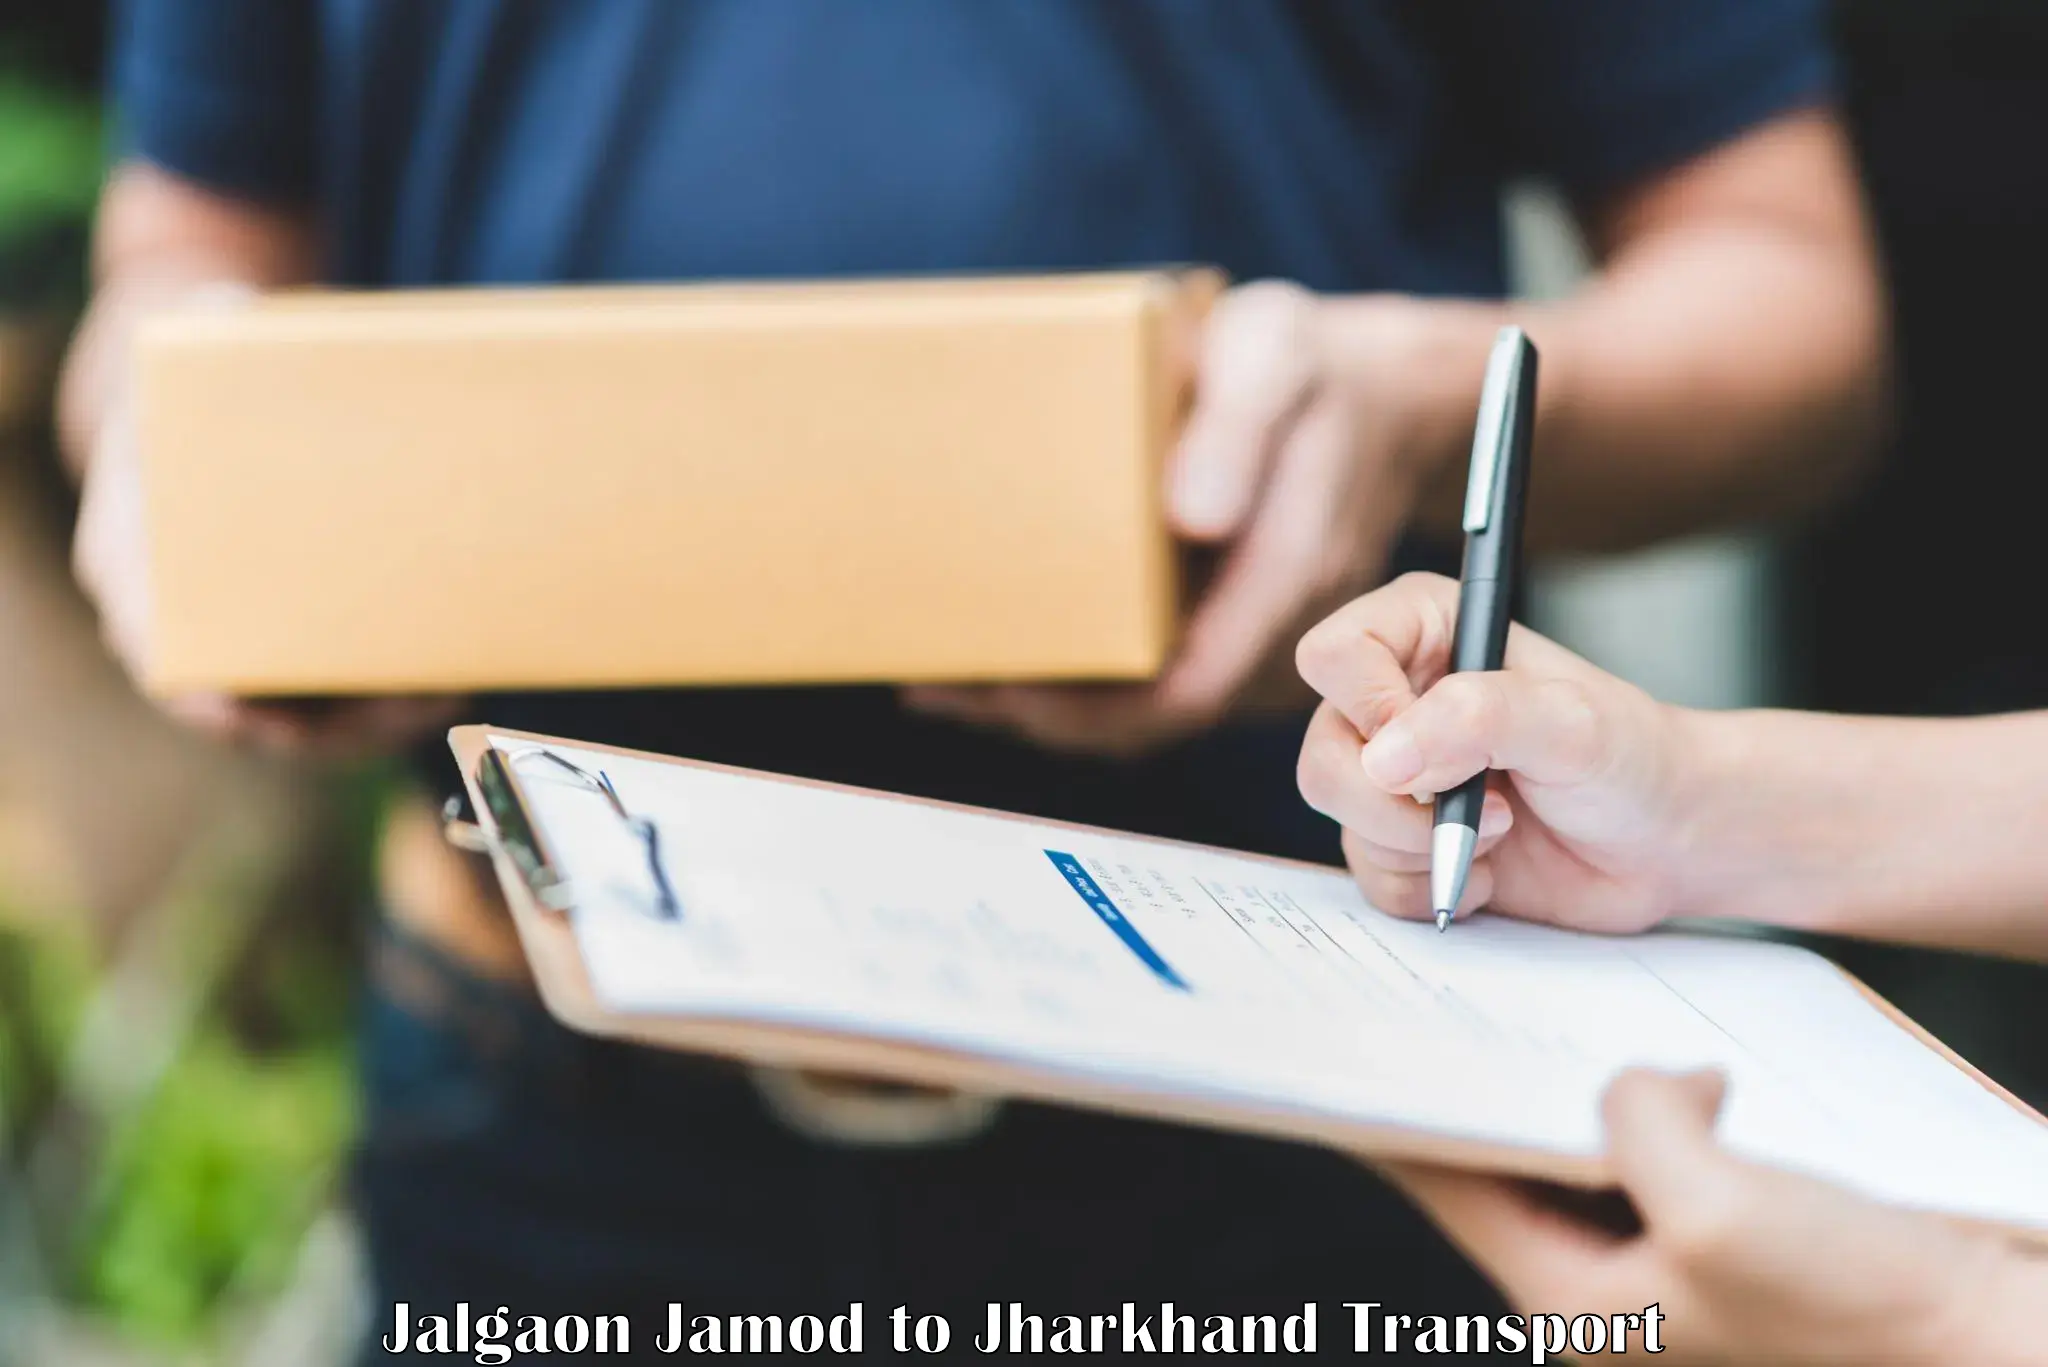 Transport in sharing Jalgaon Jamod to Mahagama